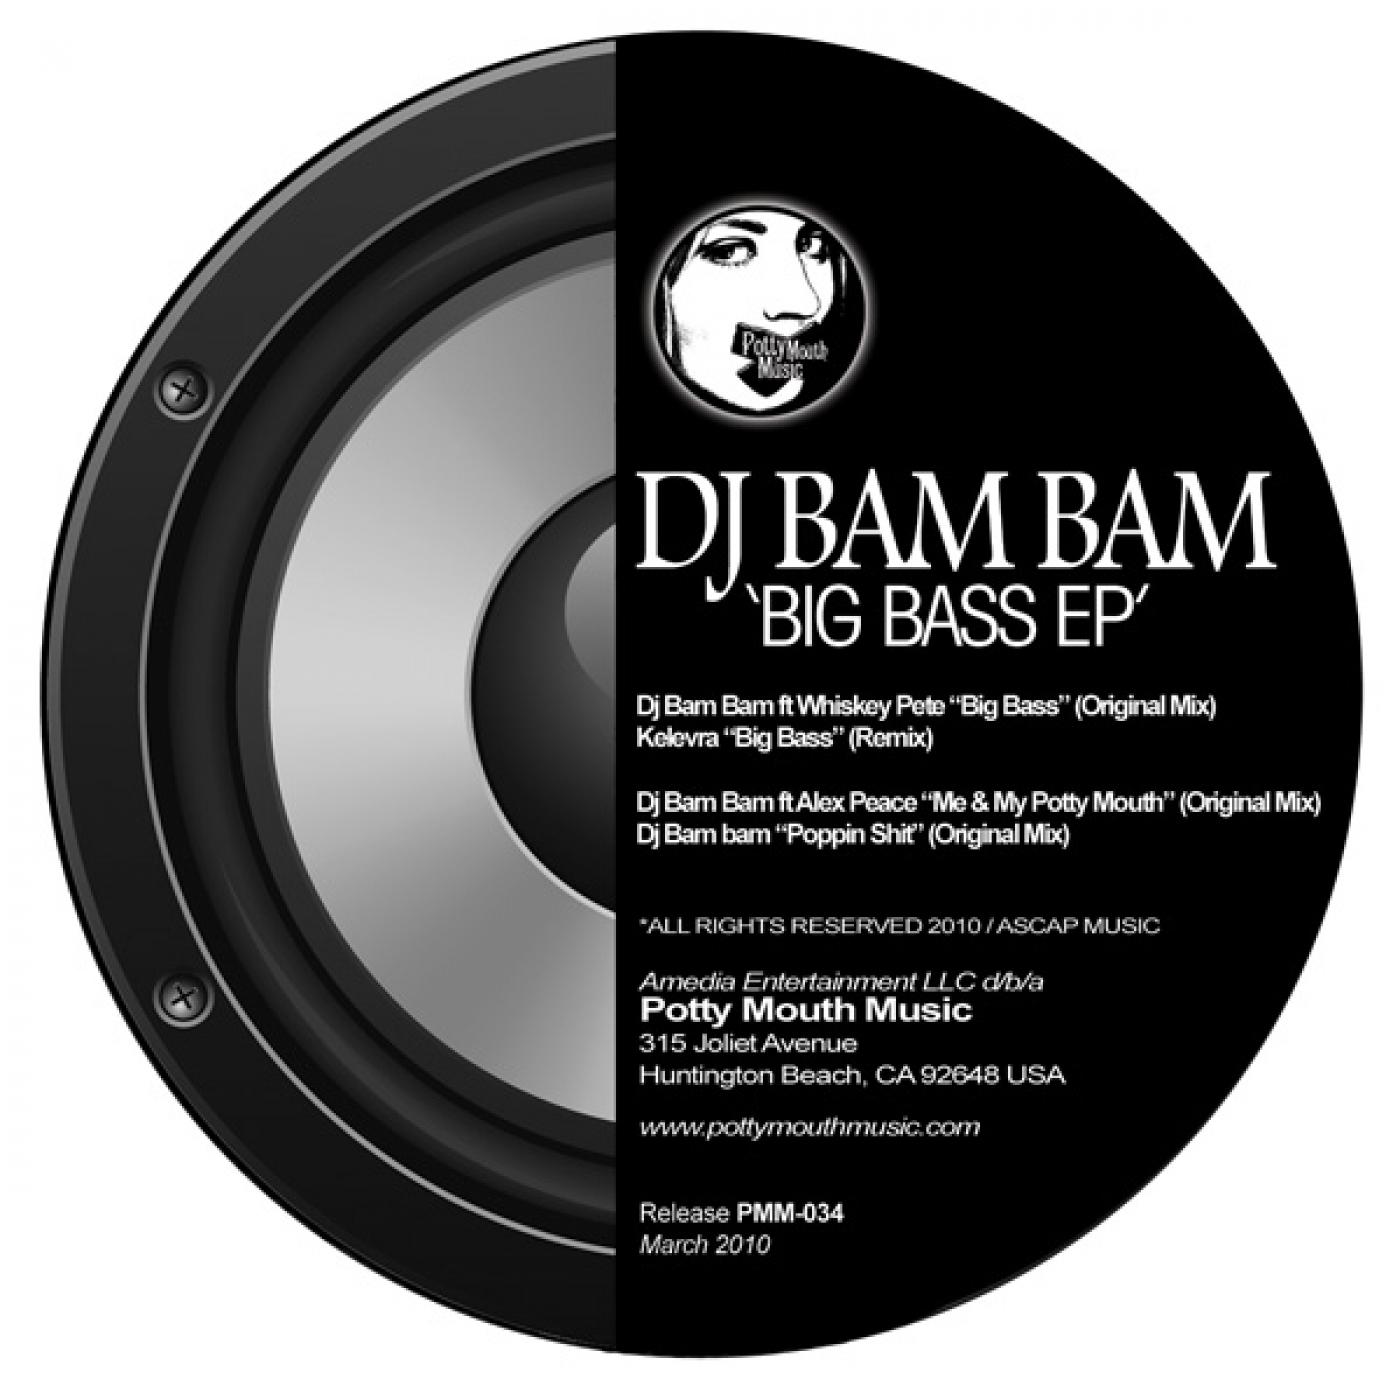 DJ Bam Bam - Poppin **** (Original Mix)